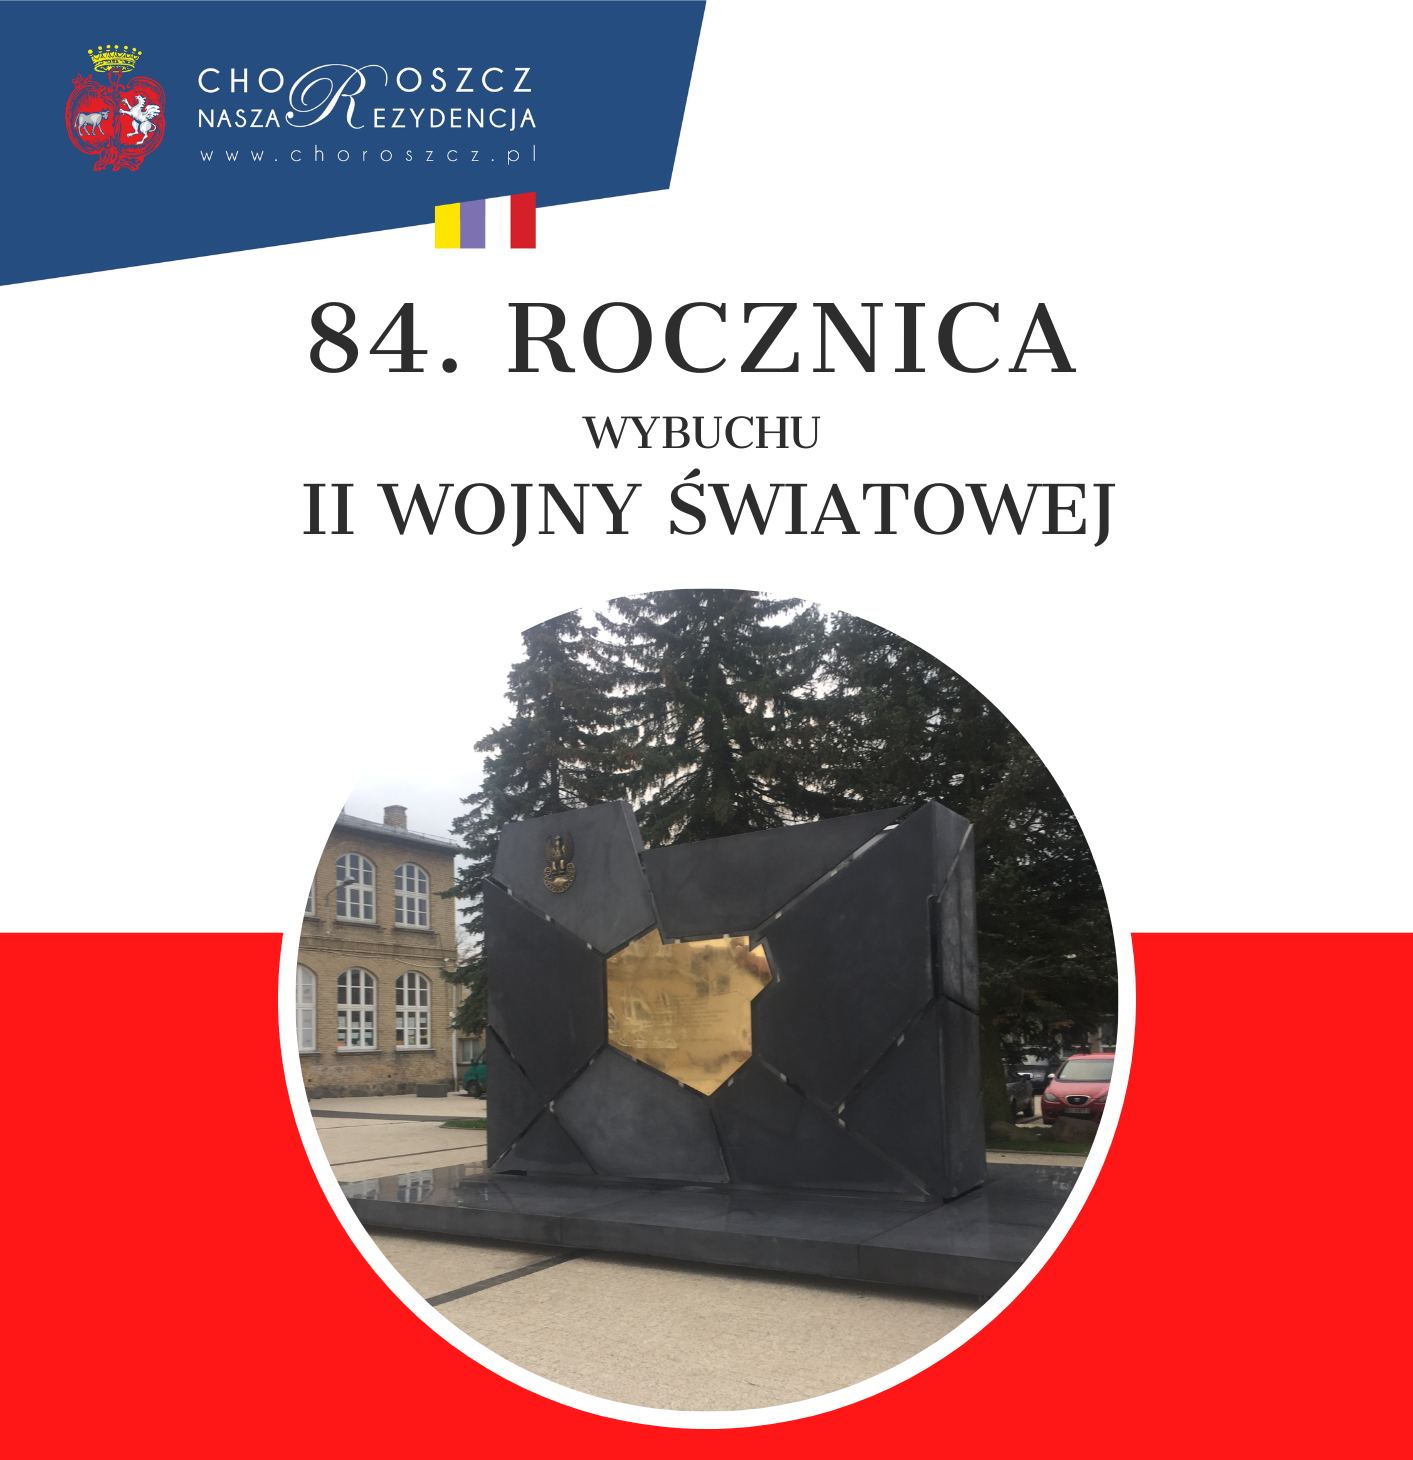 84 rocznica wybuchu IIWŚ_banner.png